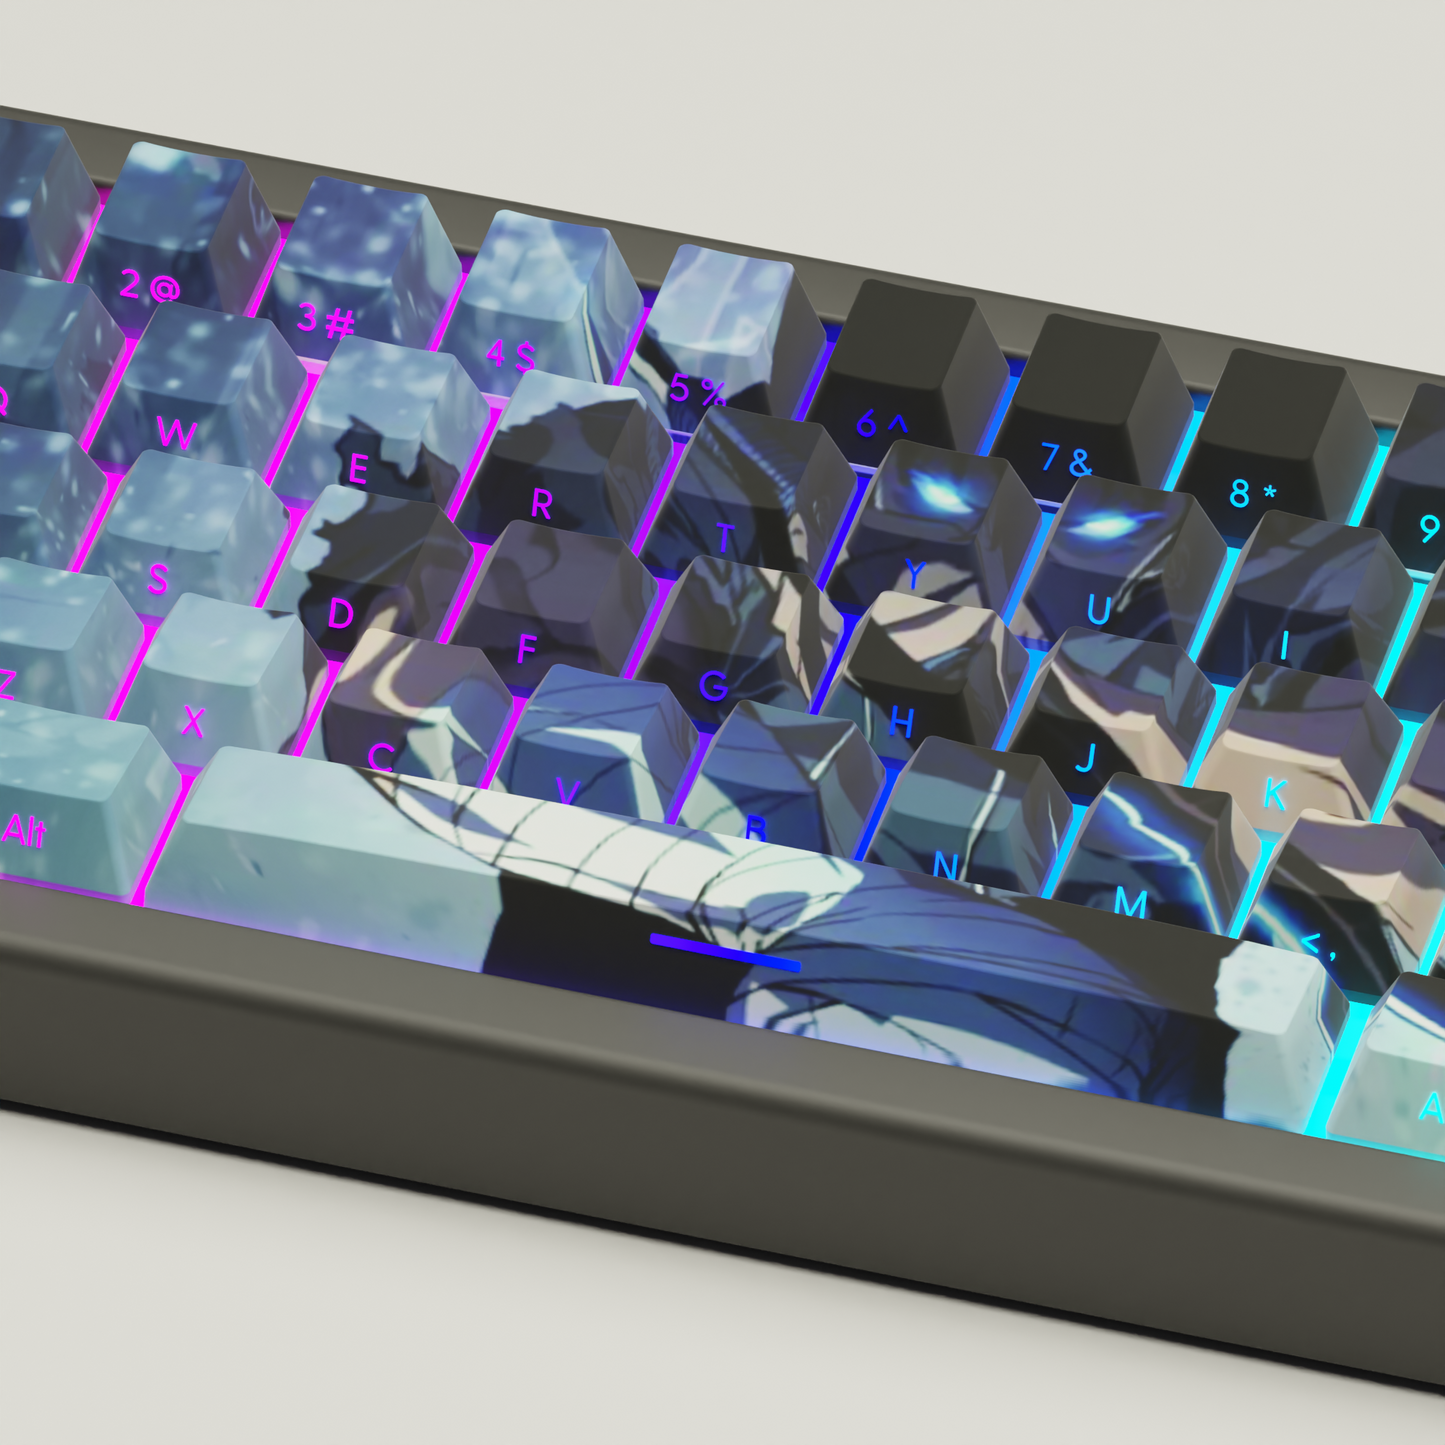 KEYBOARD - Limited Edition Custom 65% Keyboard - Solo Levelling 2 68Keys RGB backlight, triple mode (wired, wireless and bluetooth)